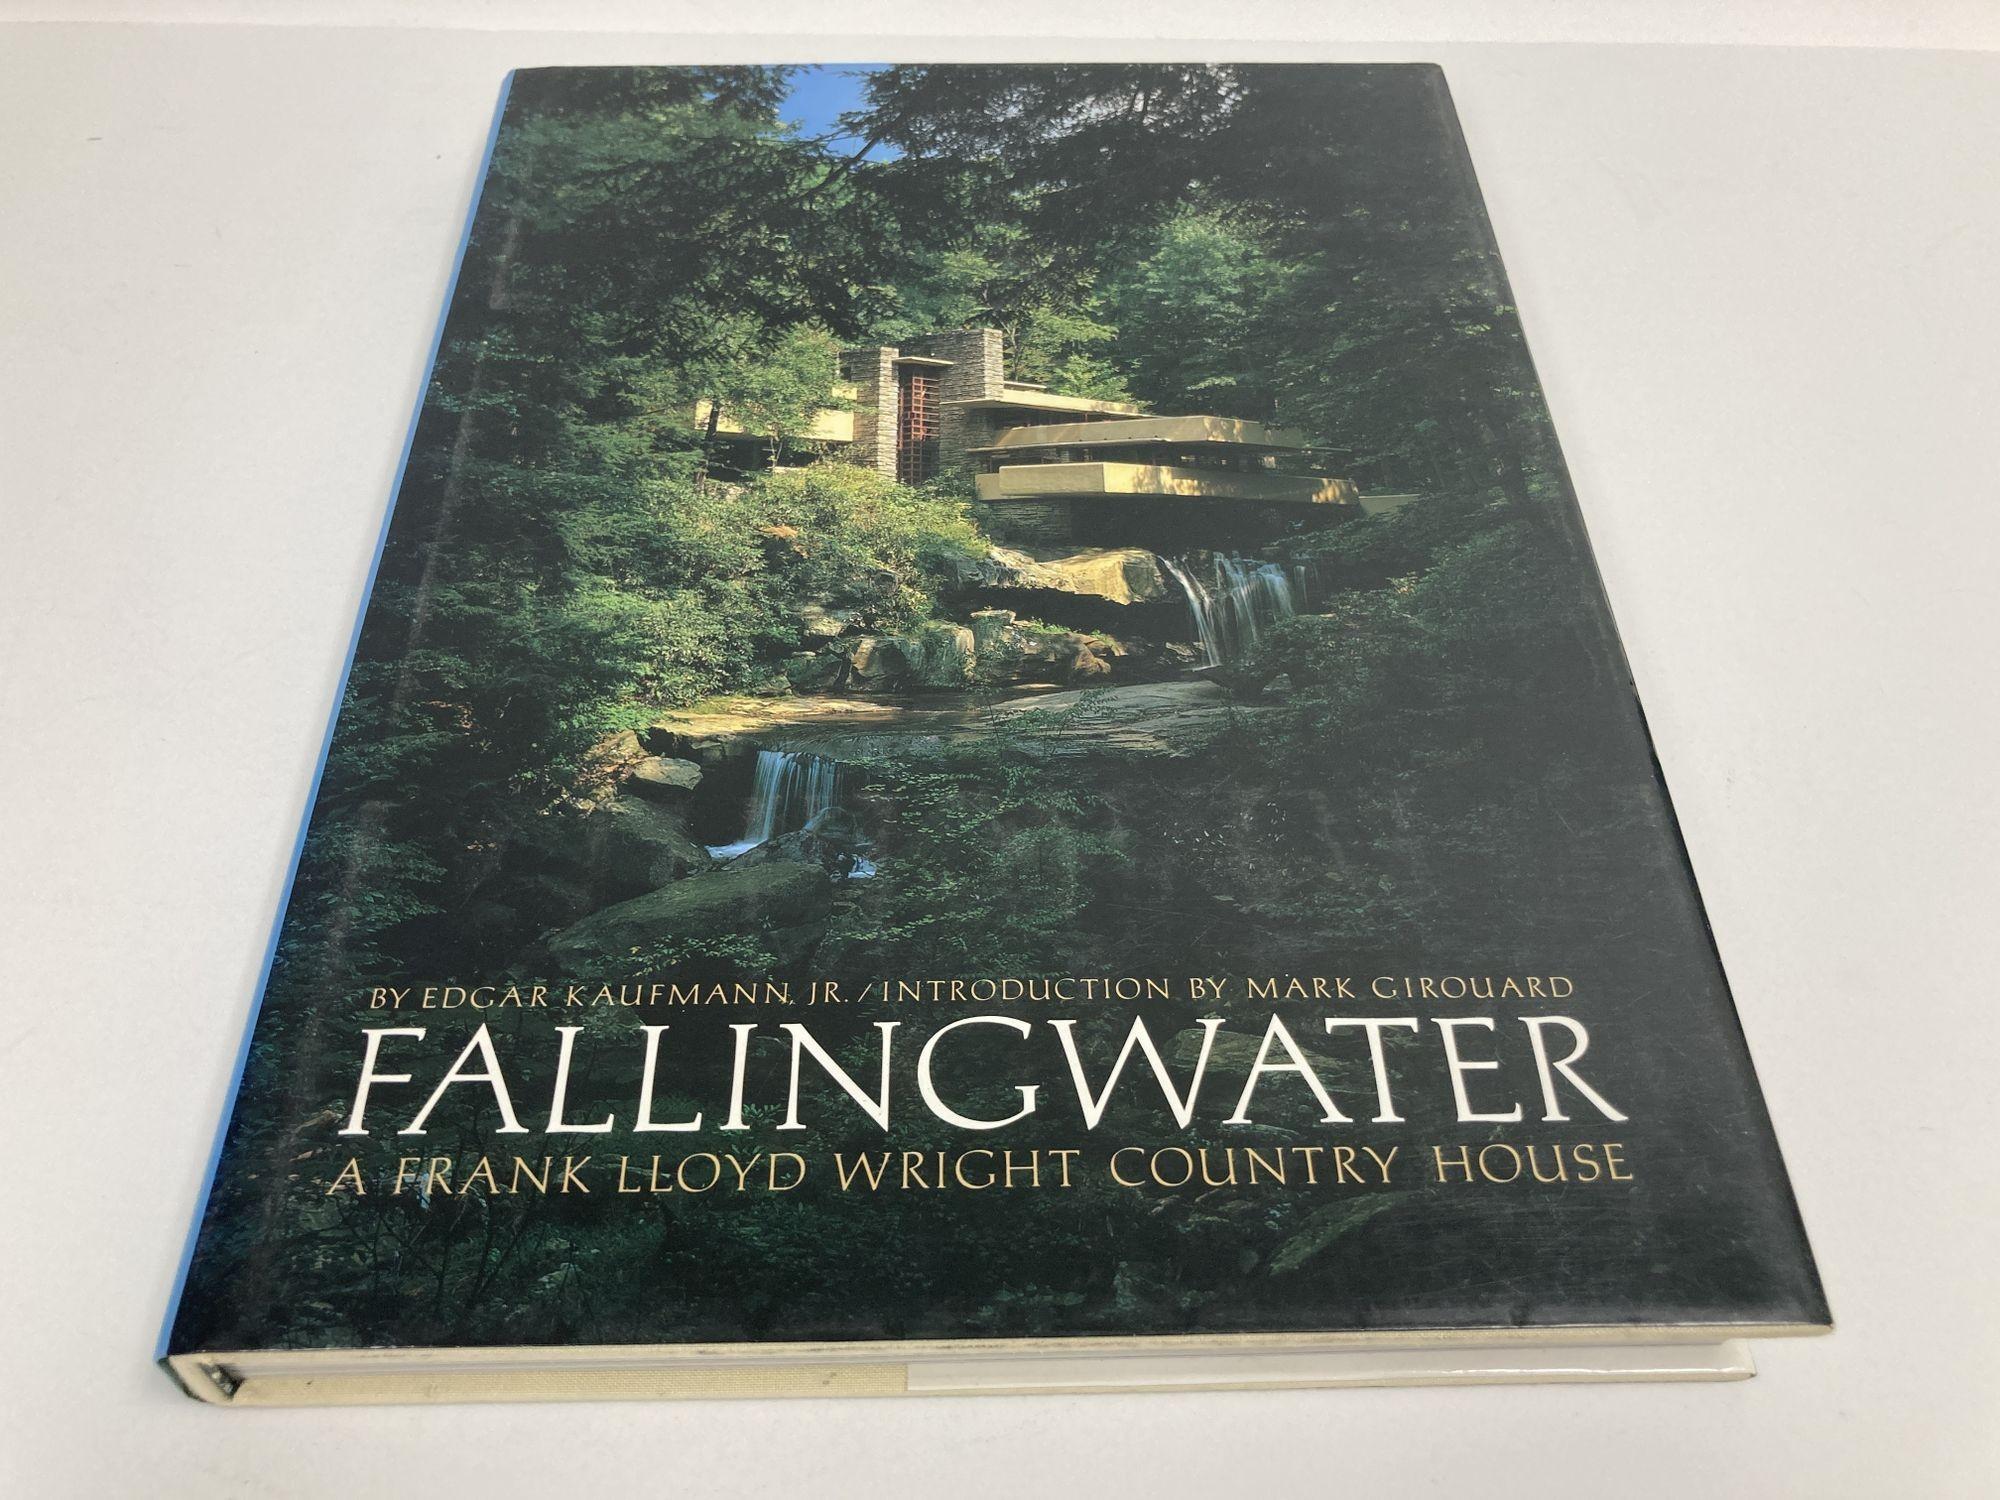 Fallingwater - une maison de campagne de Frank Lloyd Wright.
Vintage 1986 1st Edition Modernism Architecture Large Hardcover Book.
DIMENSIONS : 9,75 